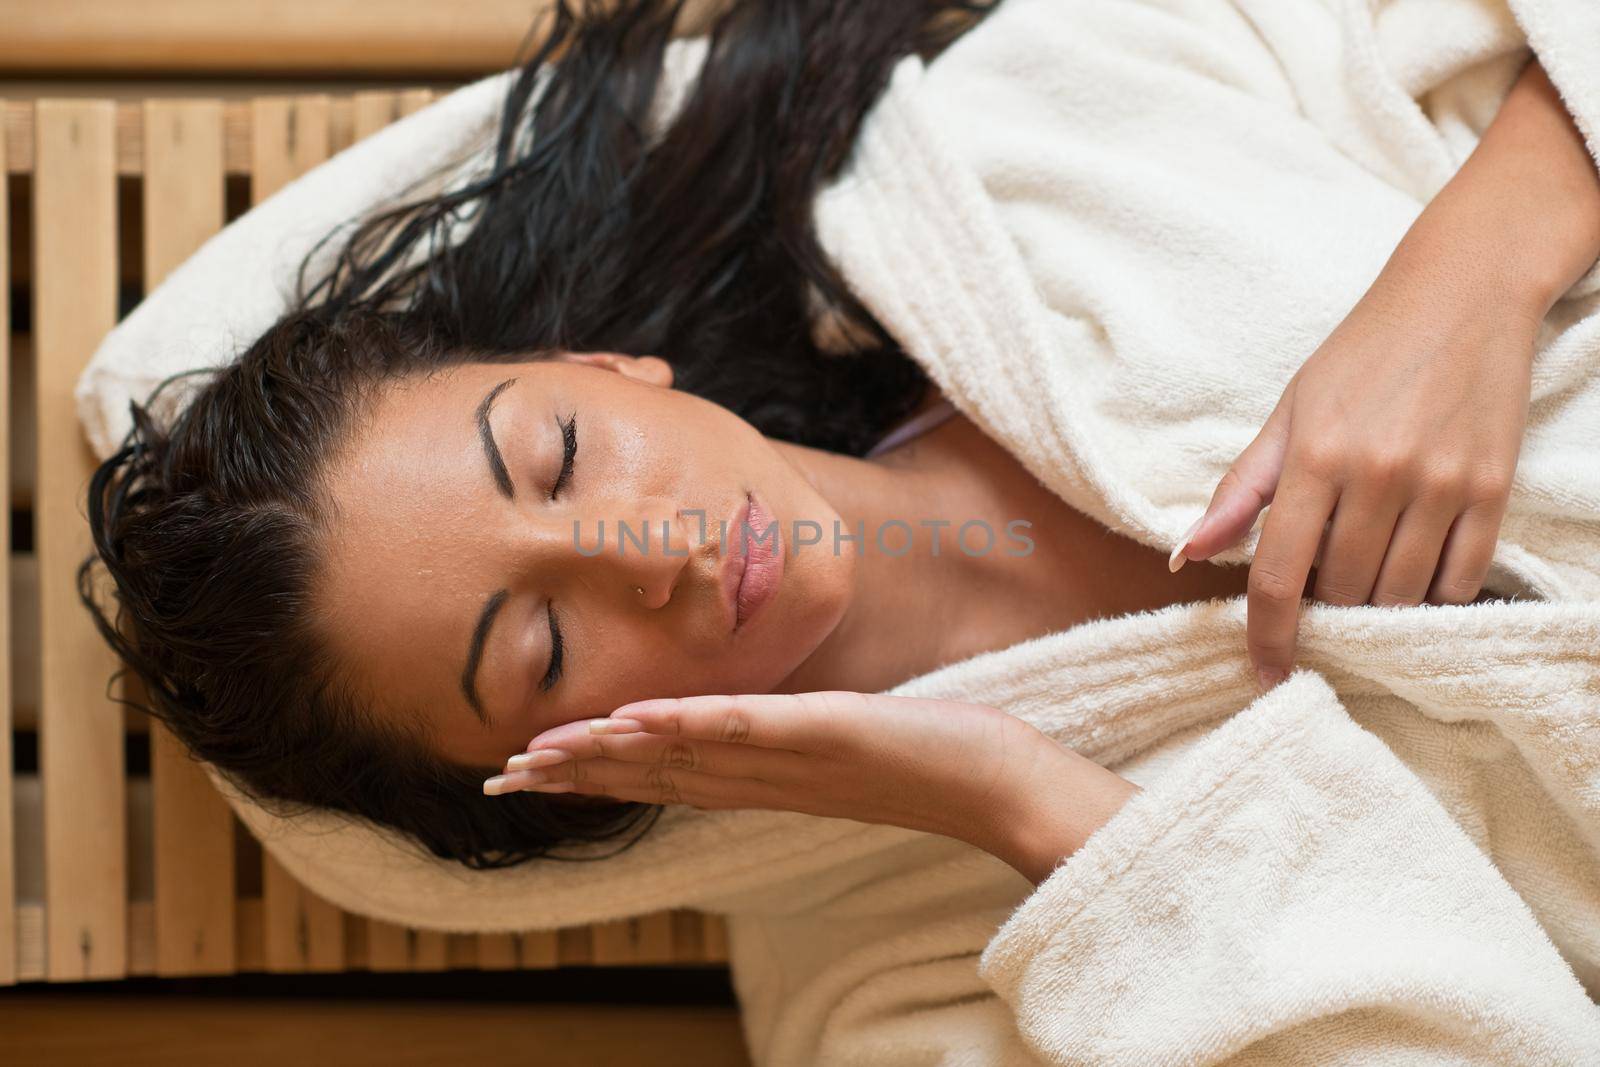 Young woman take a steam bath by dotshock